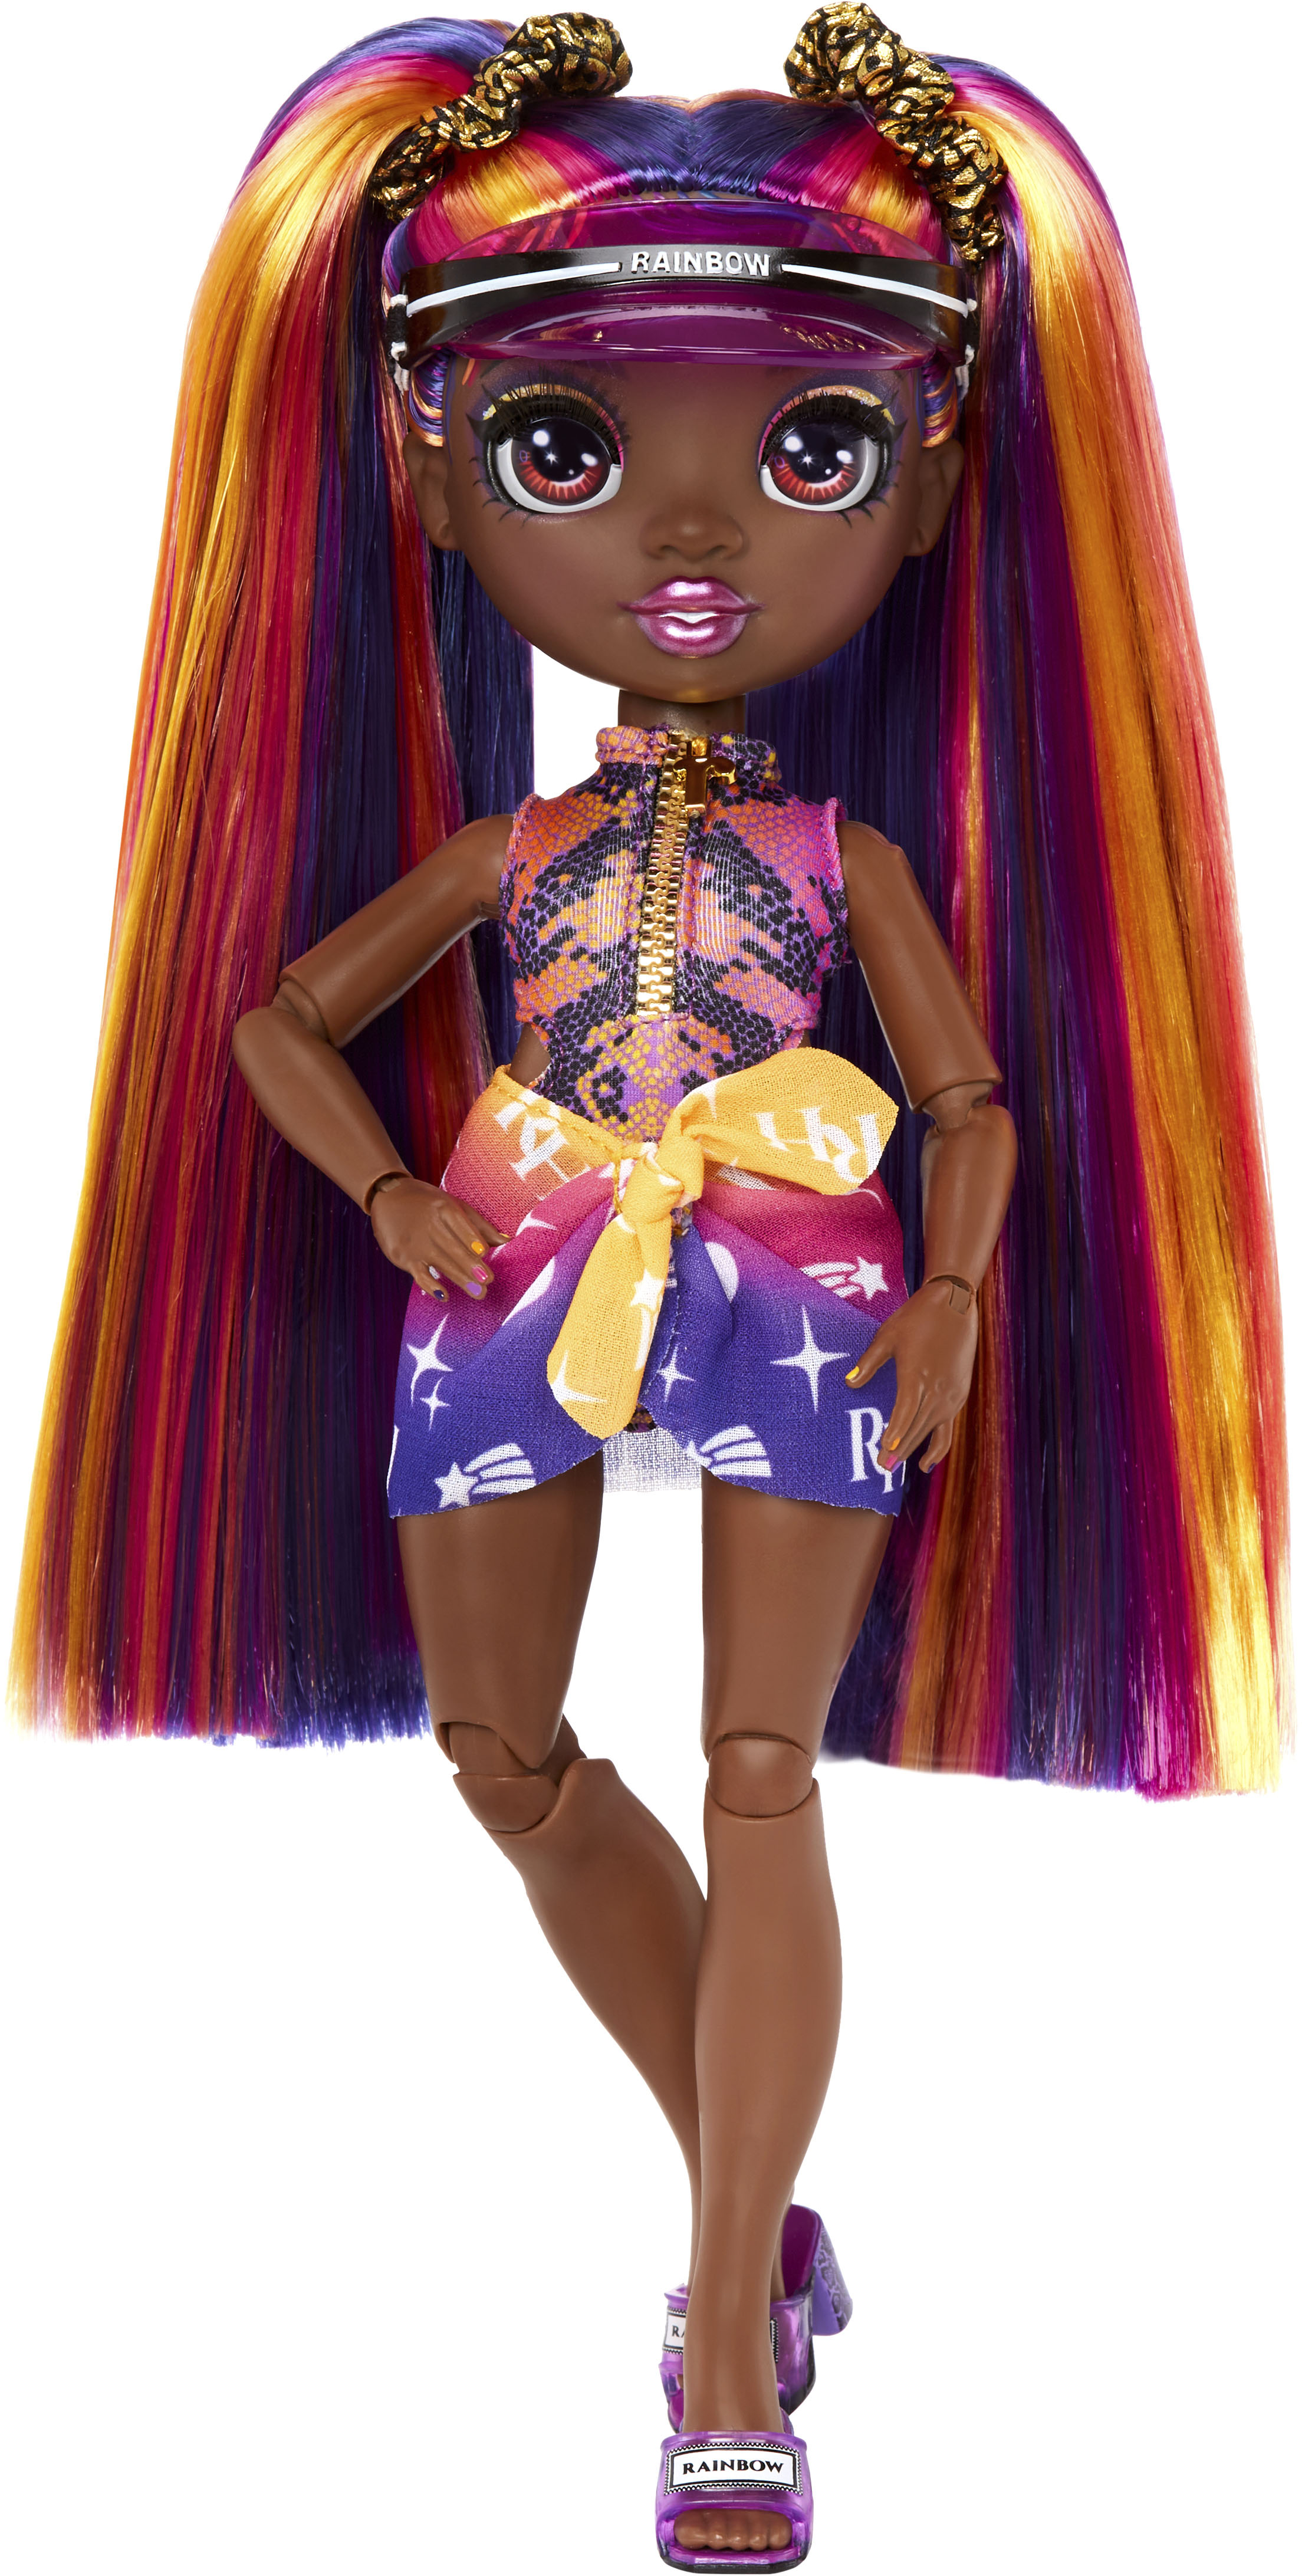 Rainbow High Pacific Coast Fashion Doll- Phaedra Westward (Sunset) 578369 -  Best Buy